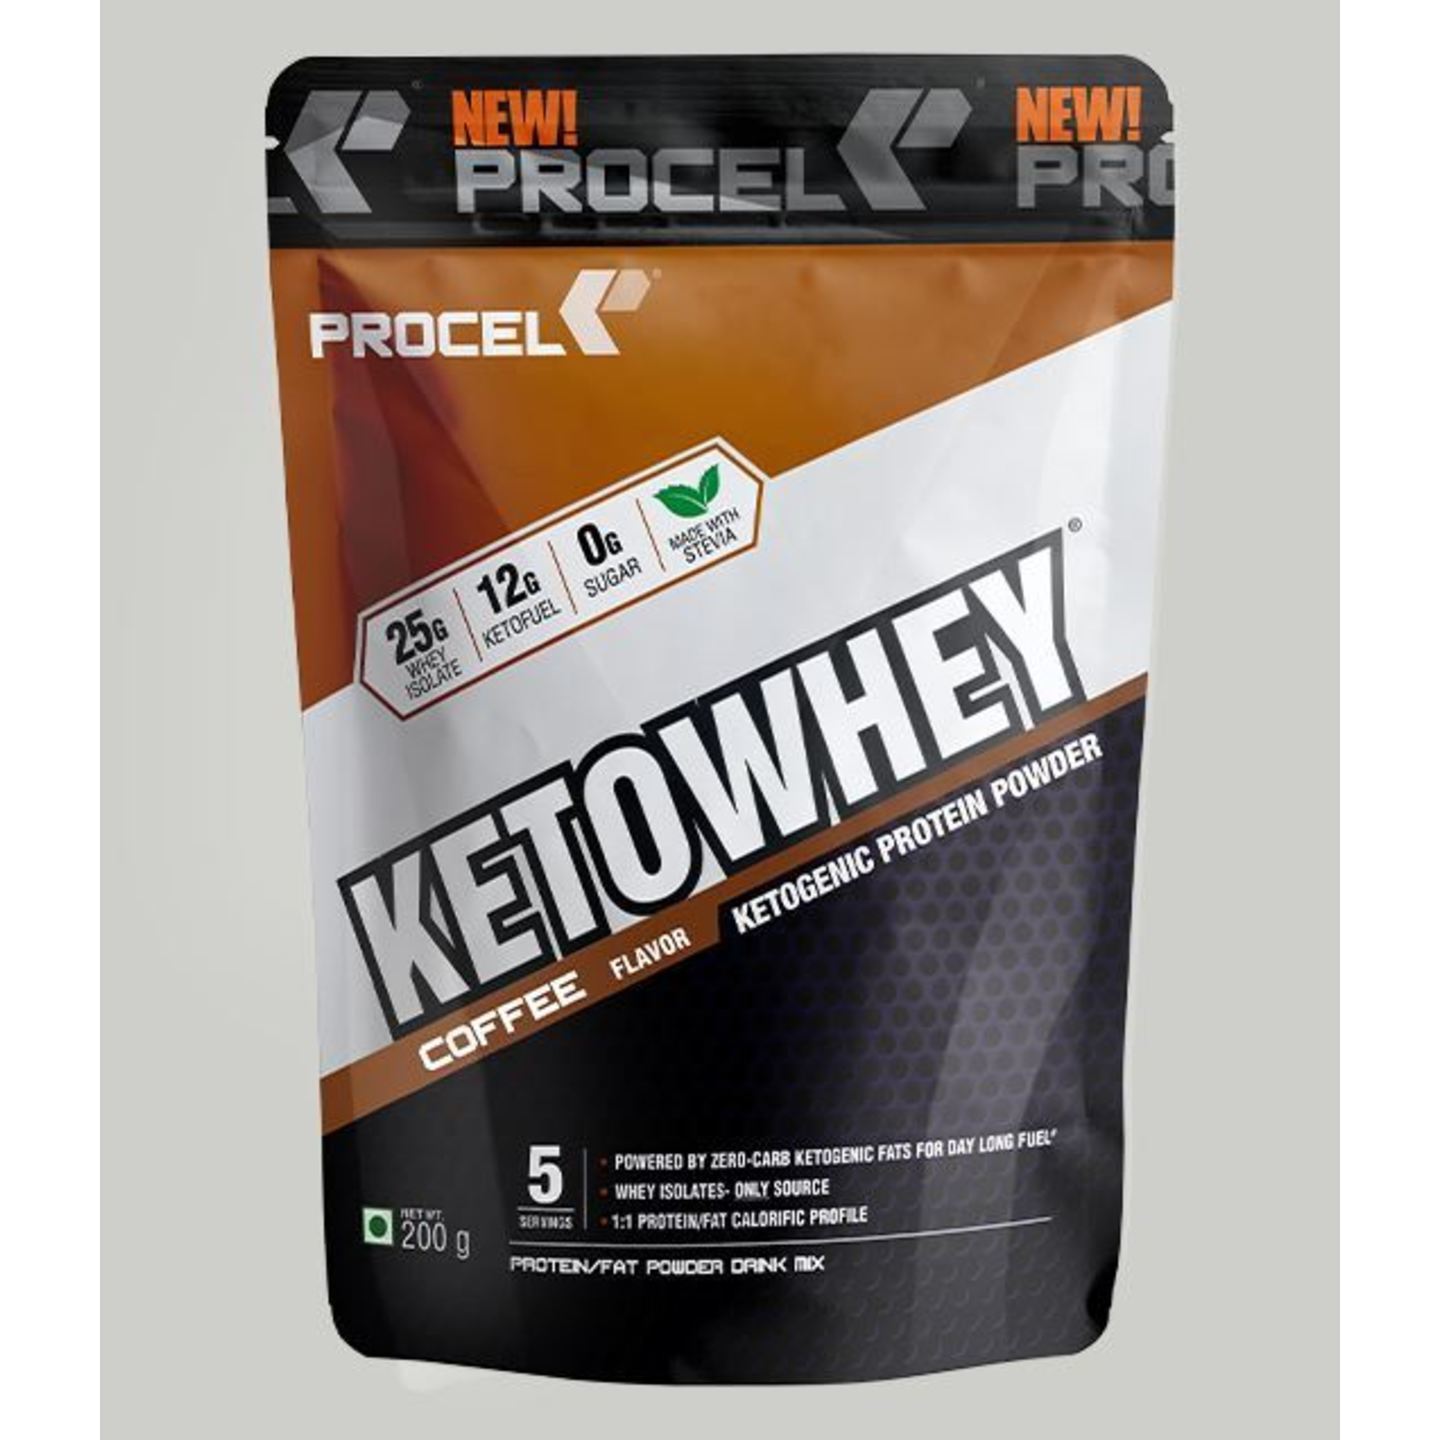 MastMart PROCEL KETOWHEY Whey Isolate Protein Powder with Ketofuel - Trail Pack 200g coffee